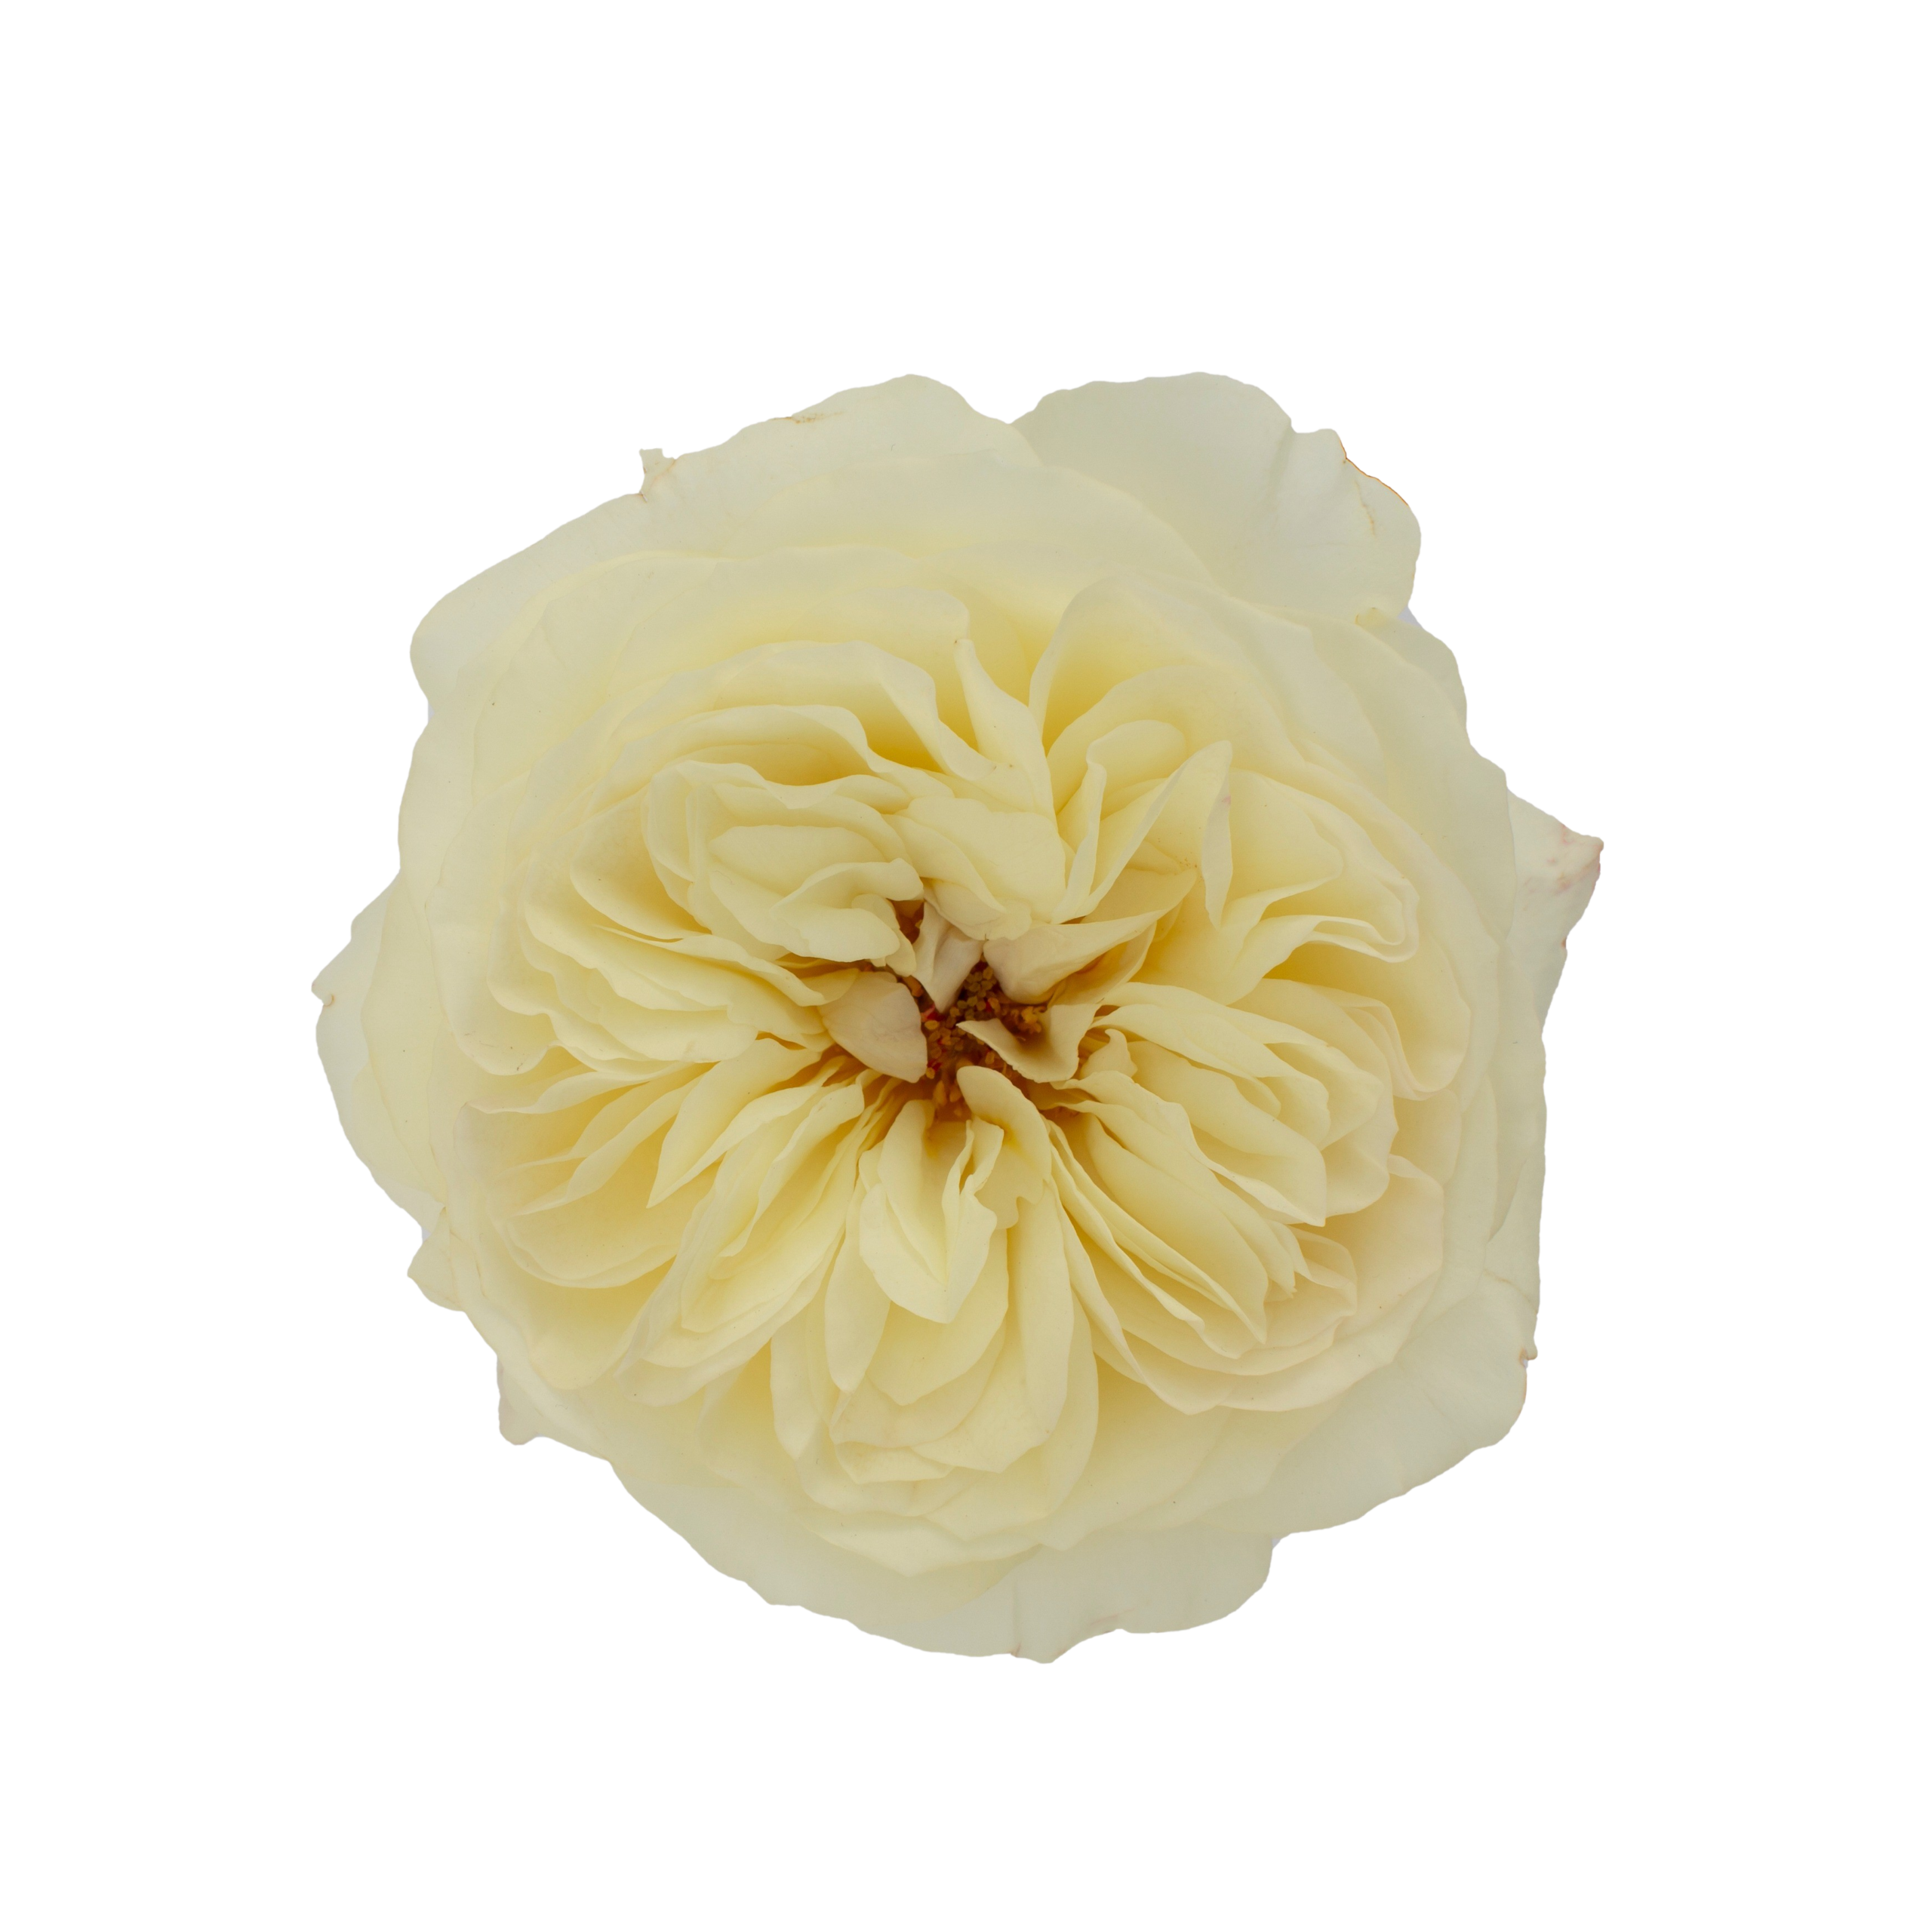 leonora-openbloom-davidaustin-cutroses-20200218-001